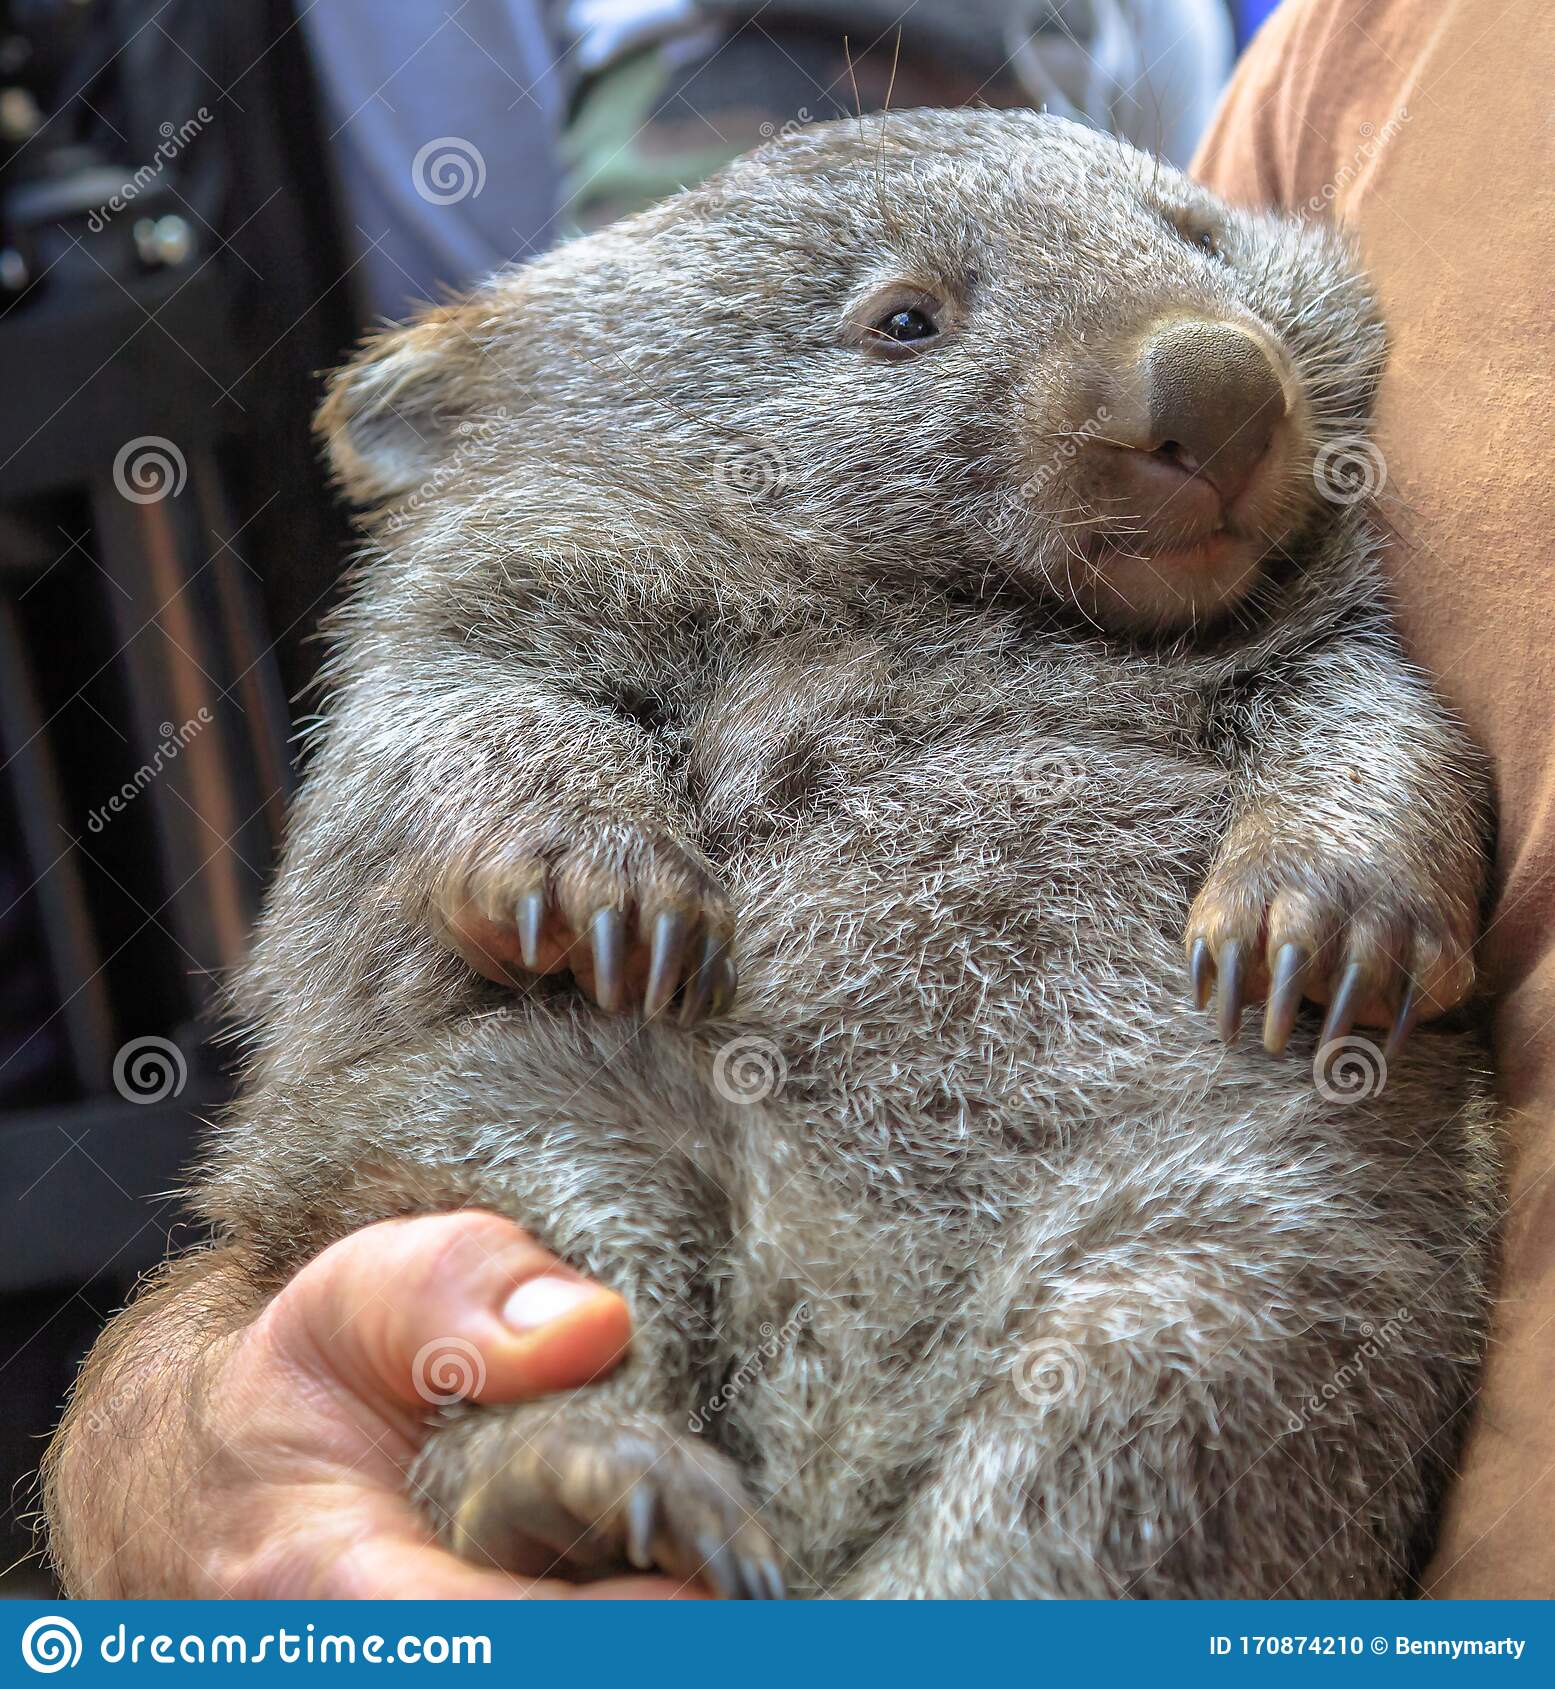 wombat-holding-australia-vombatus-ursinus-arms-ranger-fetal-position-closeup-masupial-adult-australian-herbivore-170874210.jpg